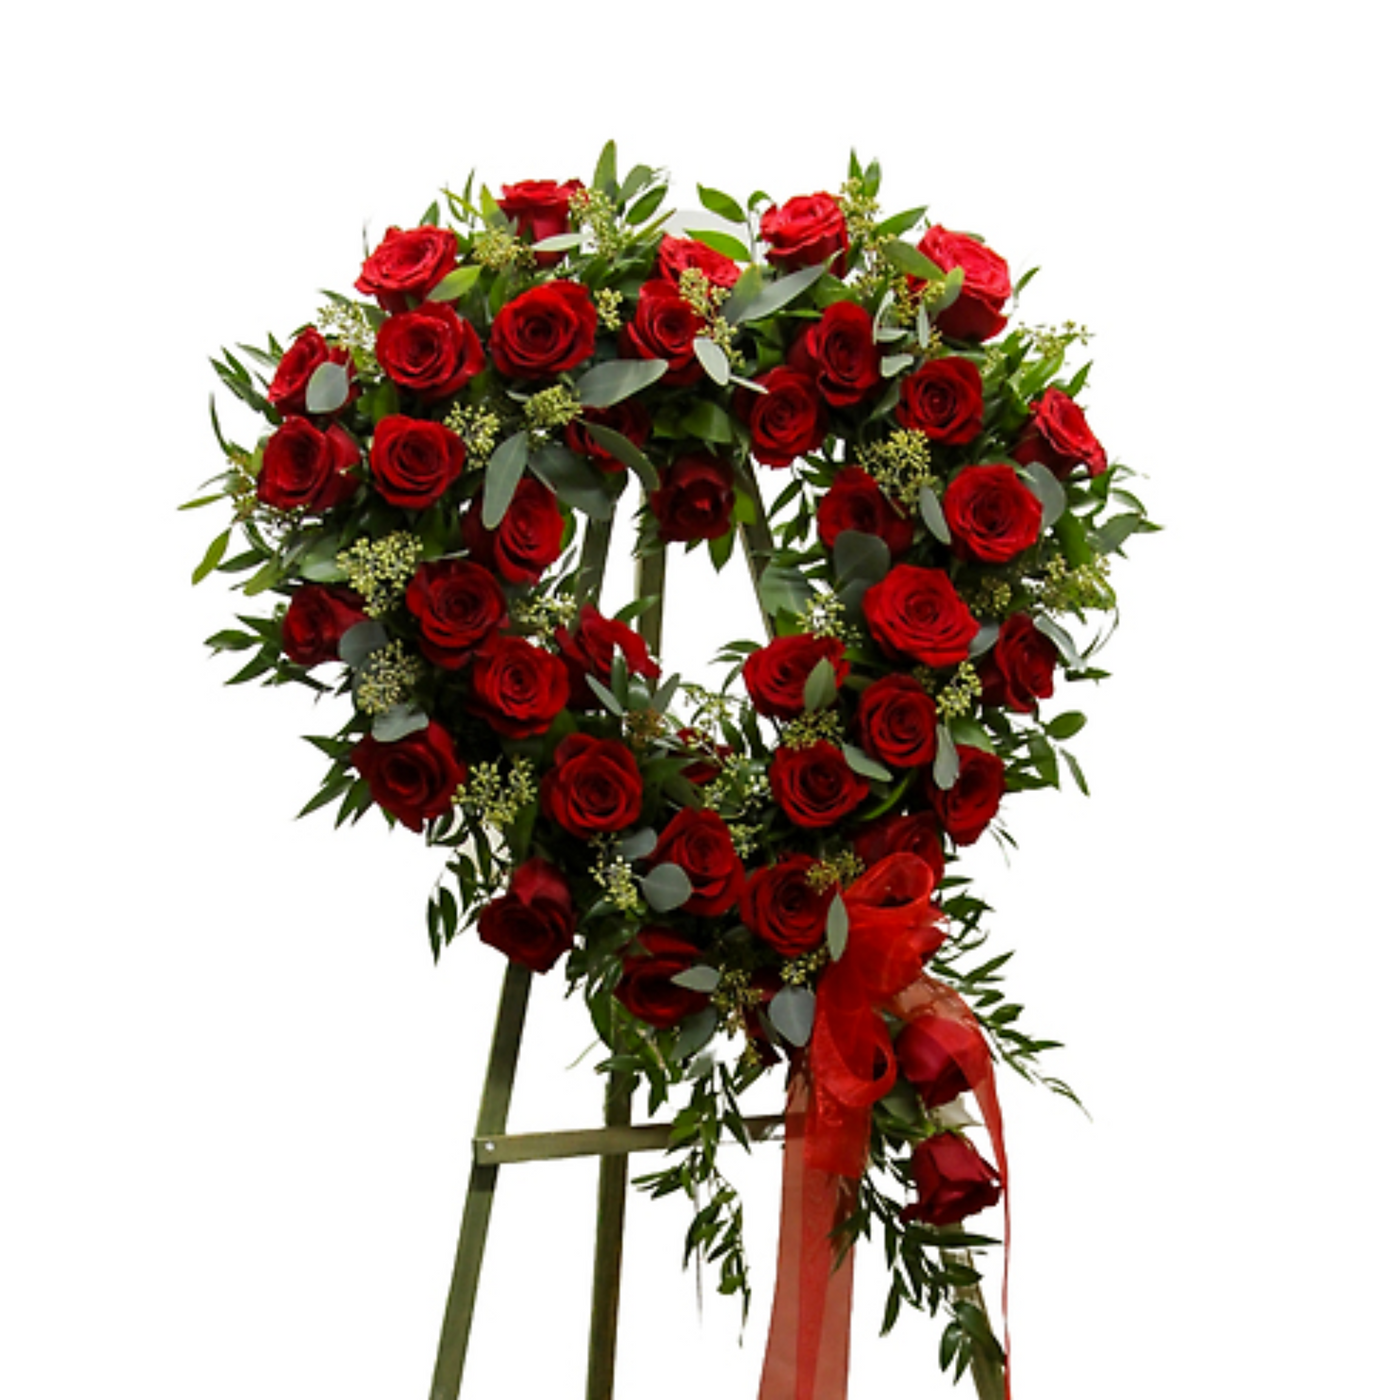 Garden Red Roses Funeral Standing Heart